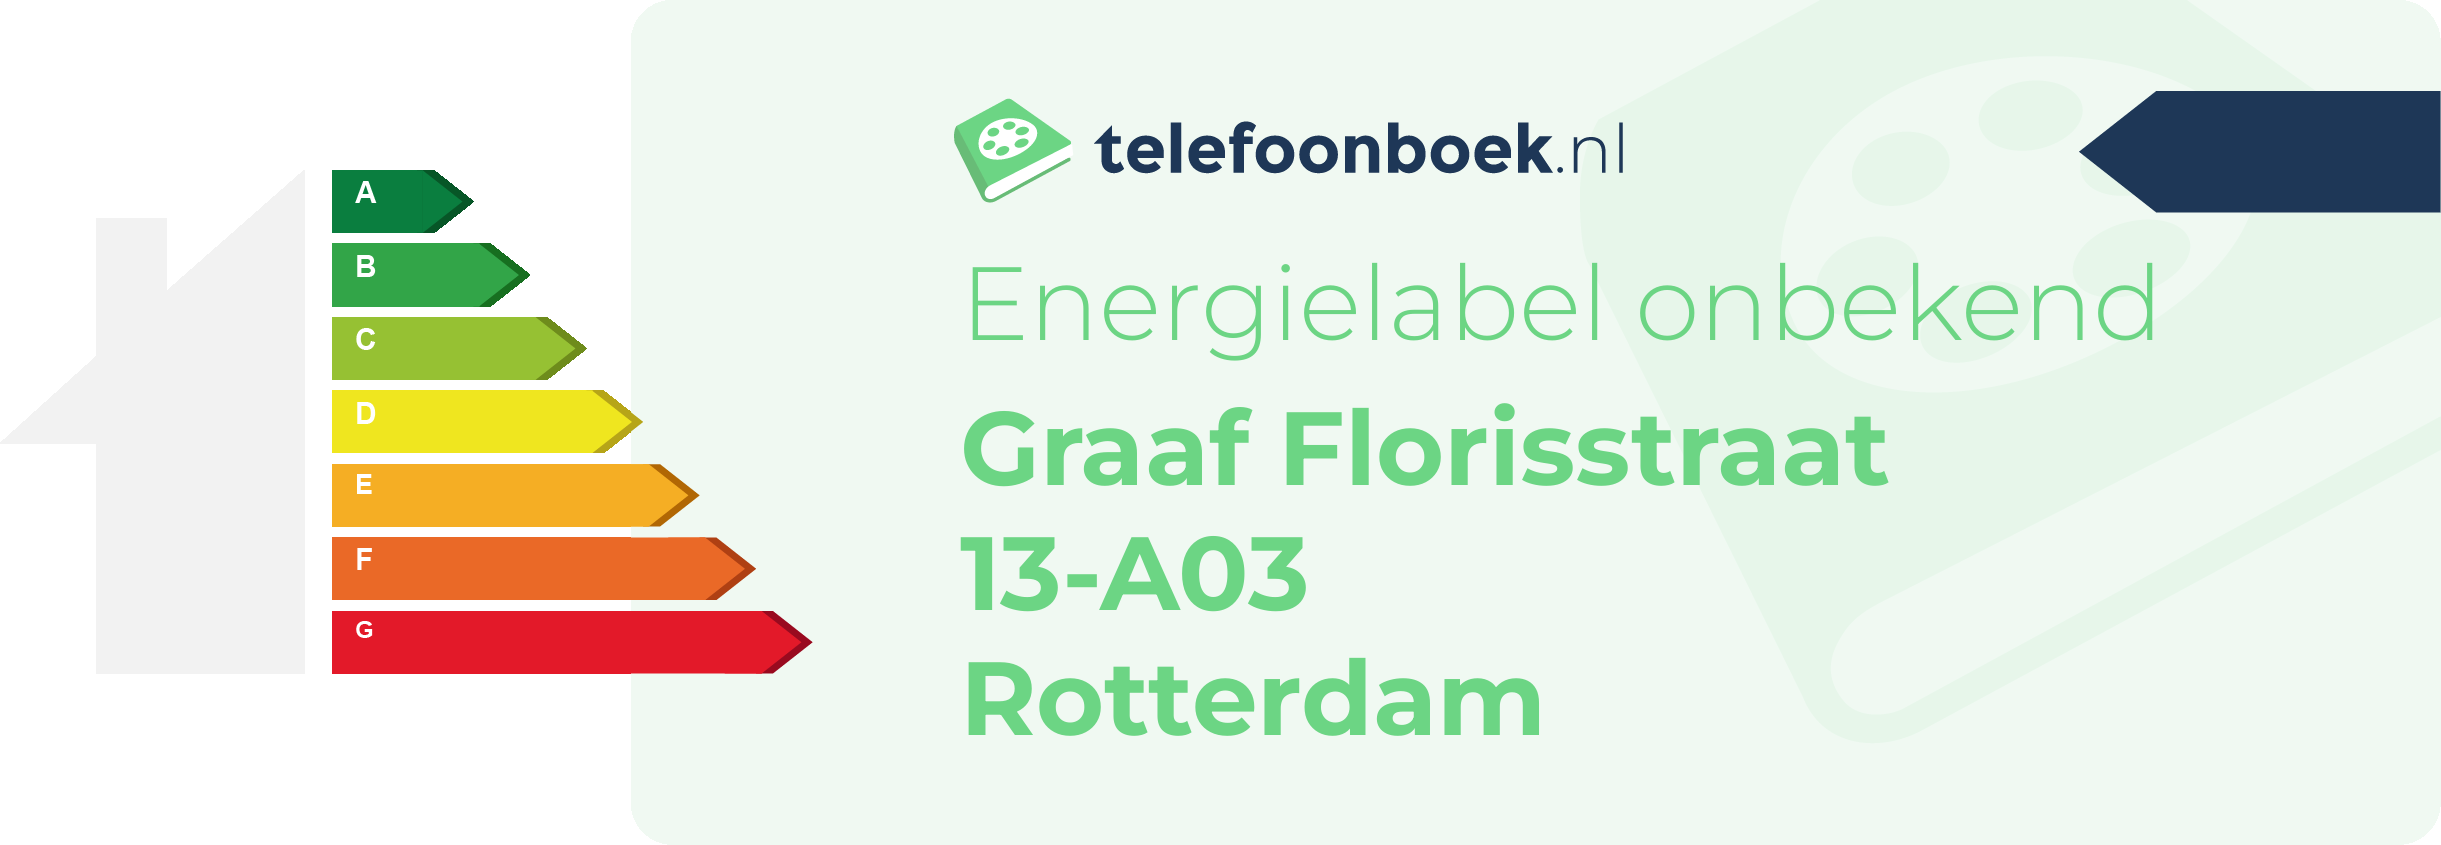 Energielabel Graaf Florisstraat 13-A03 Rotterdam